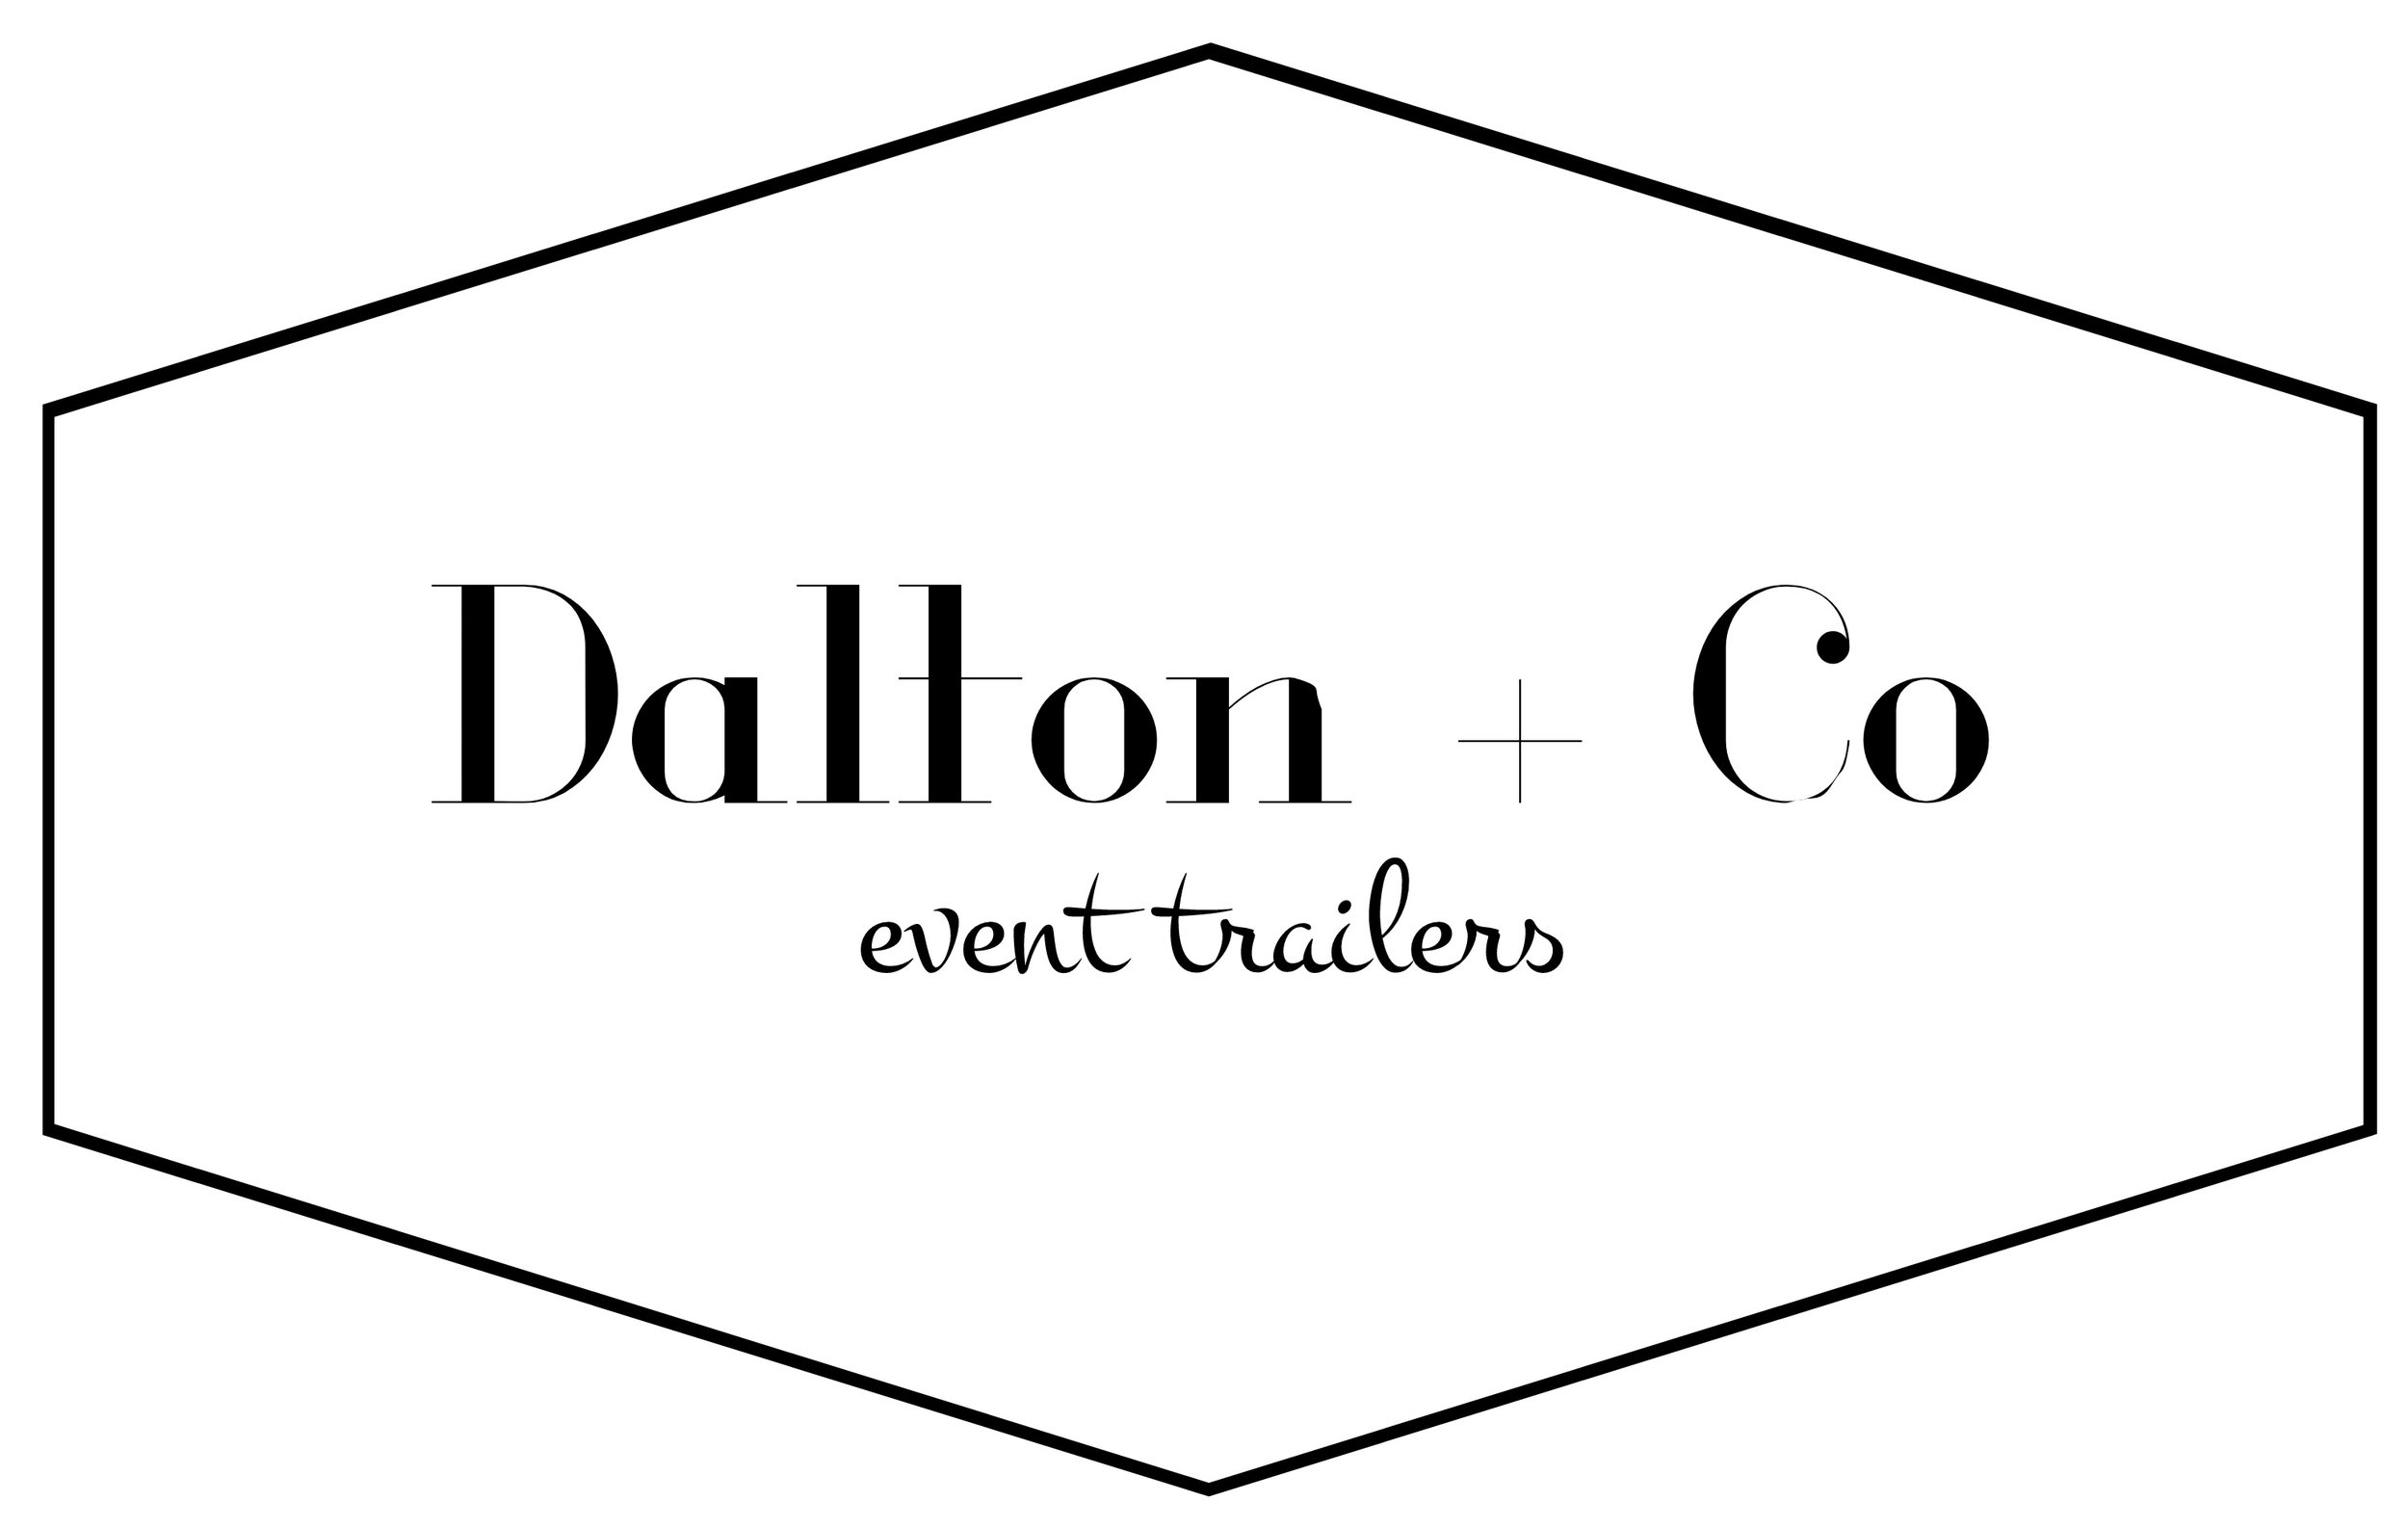 Dalton and Co (1).jpg